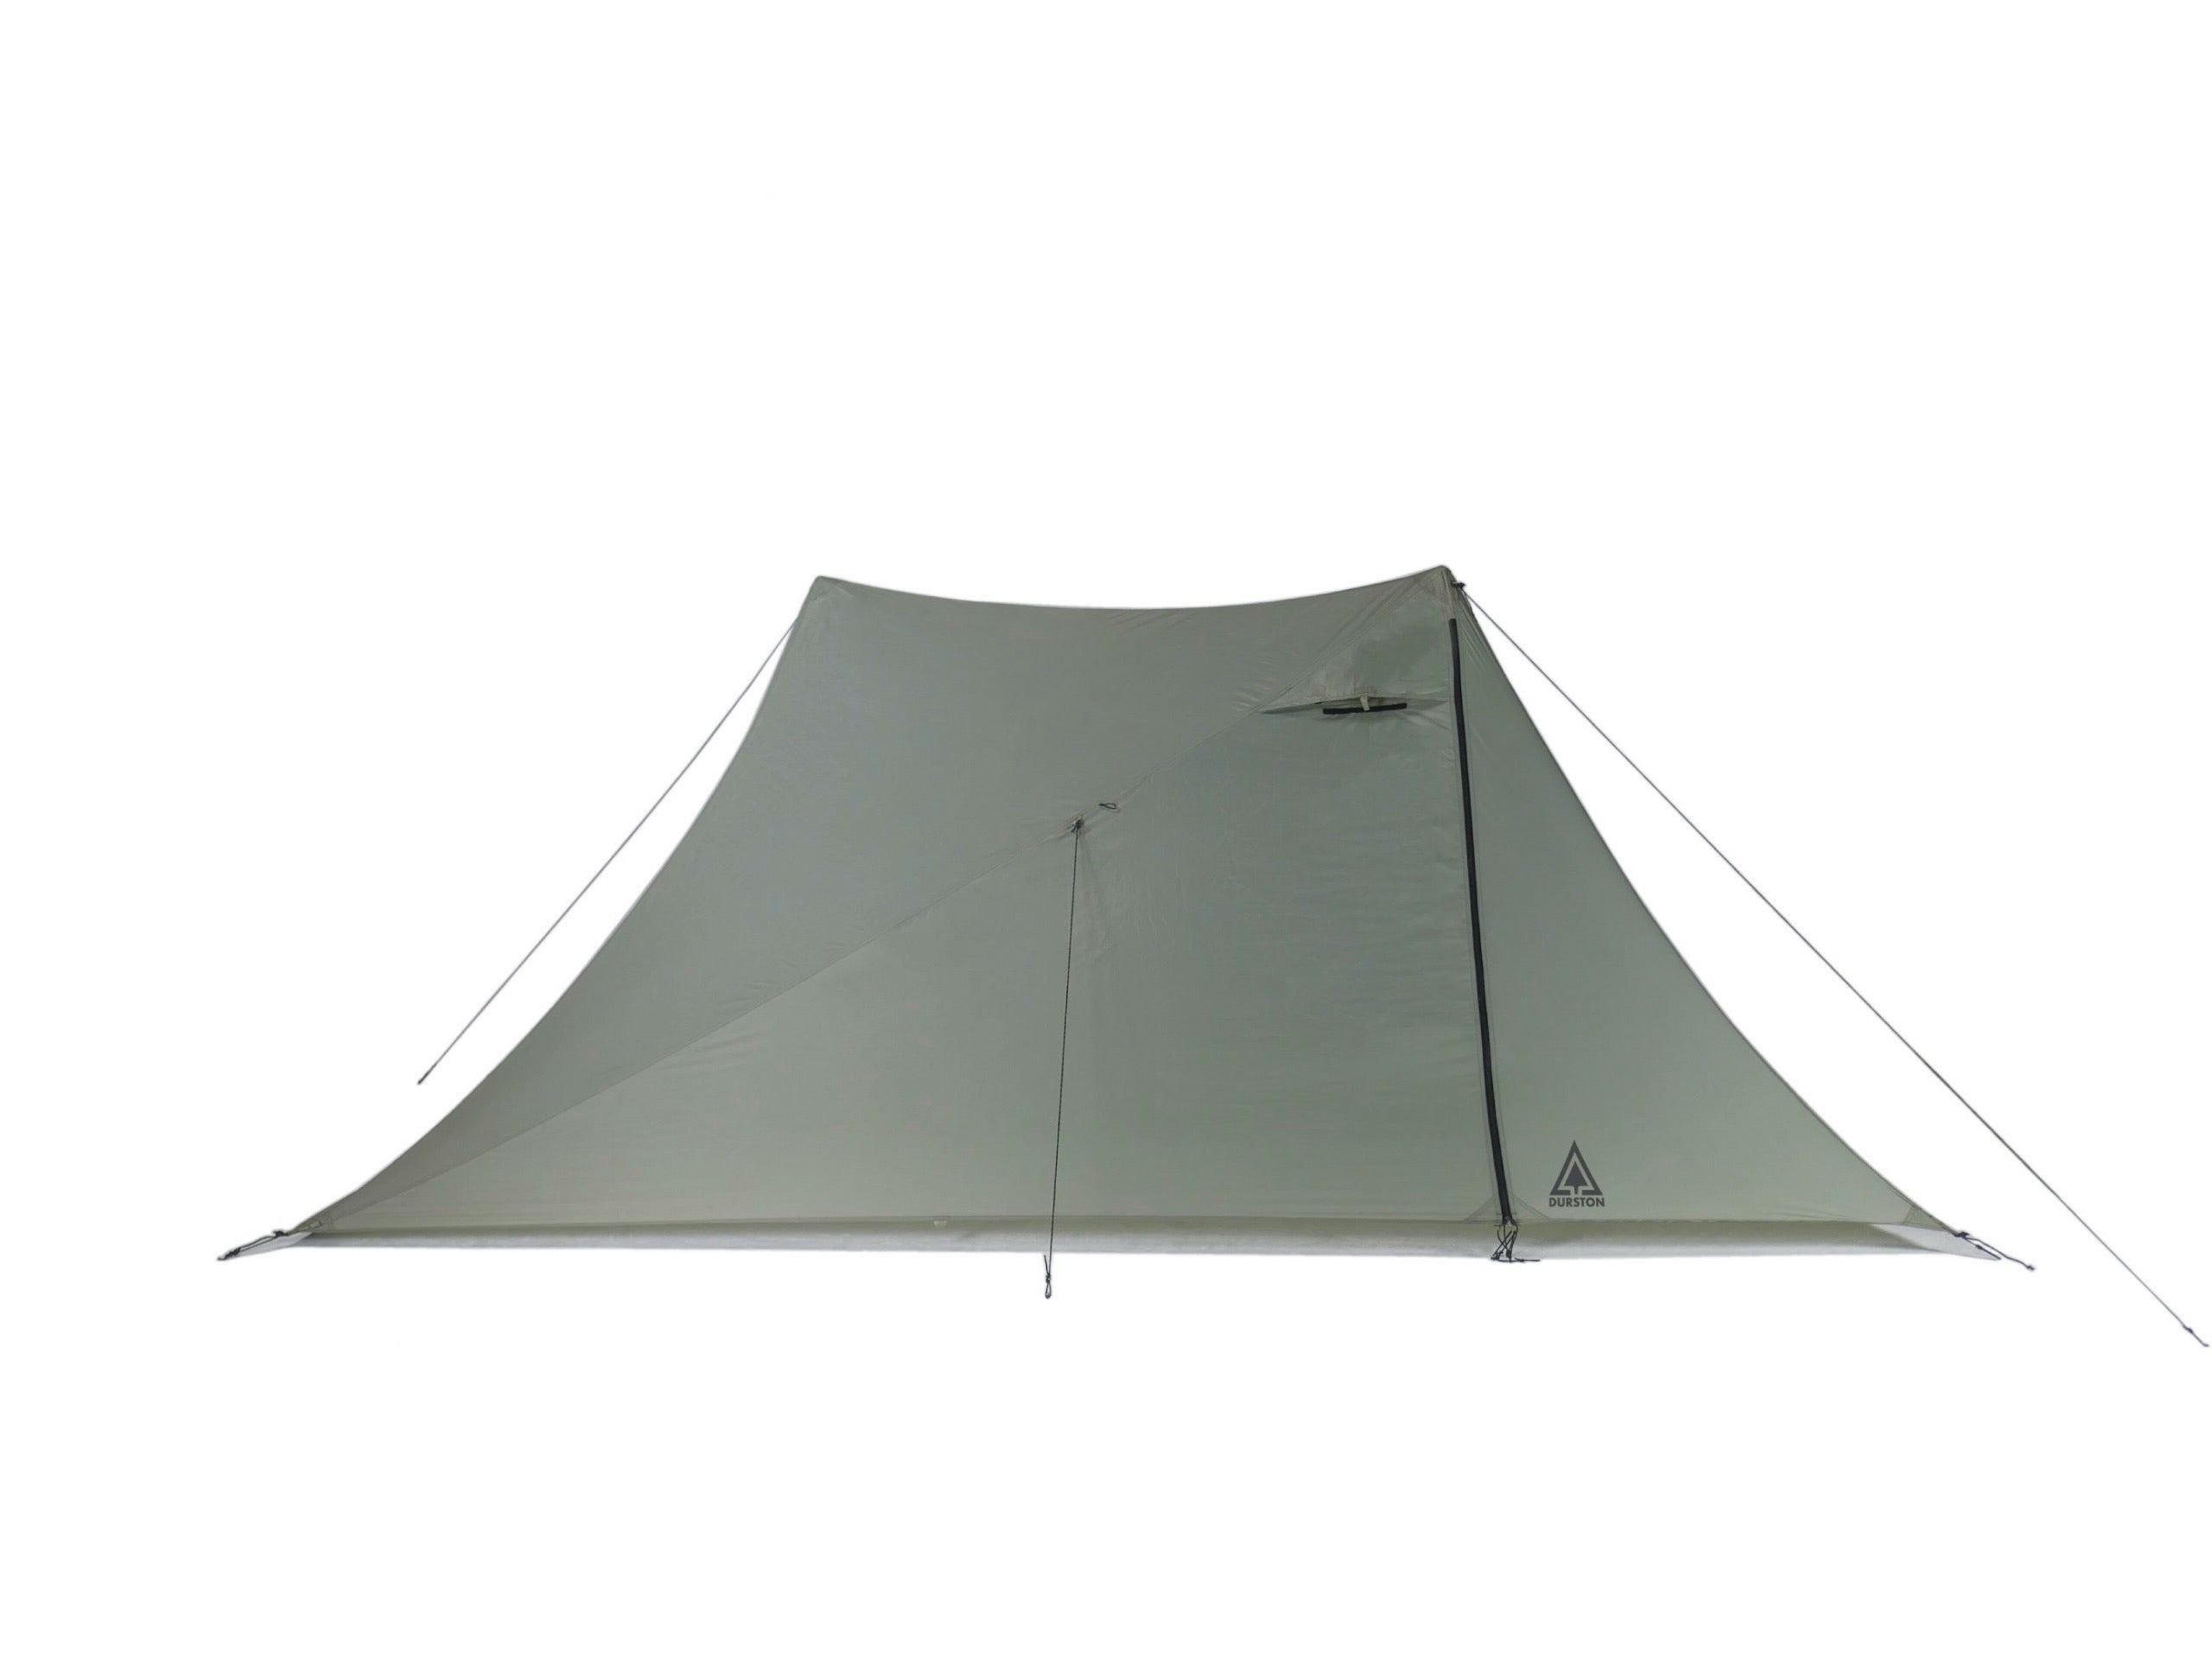 Durston | X-Mid 1 Ultralight Tent